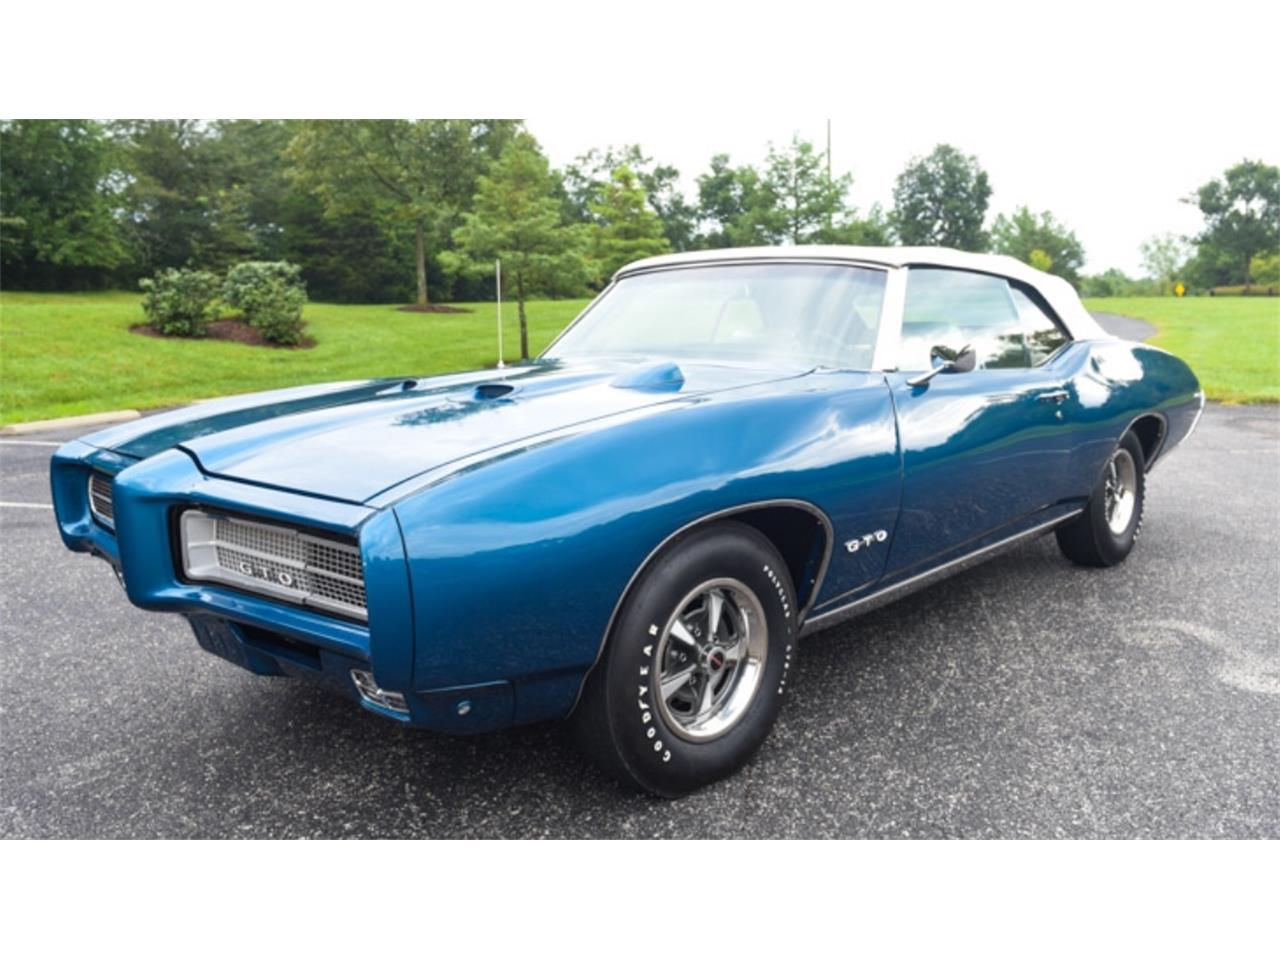 For Sale: 1969 Pontiac GTO in Louisville, Kentucky for sale in Louisville, KY